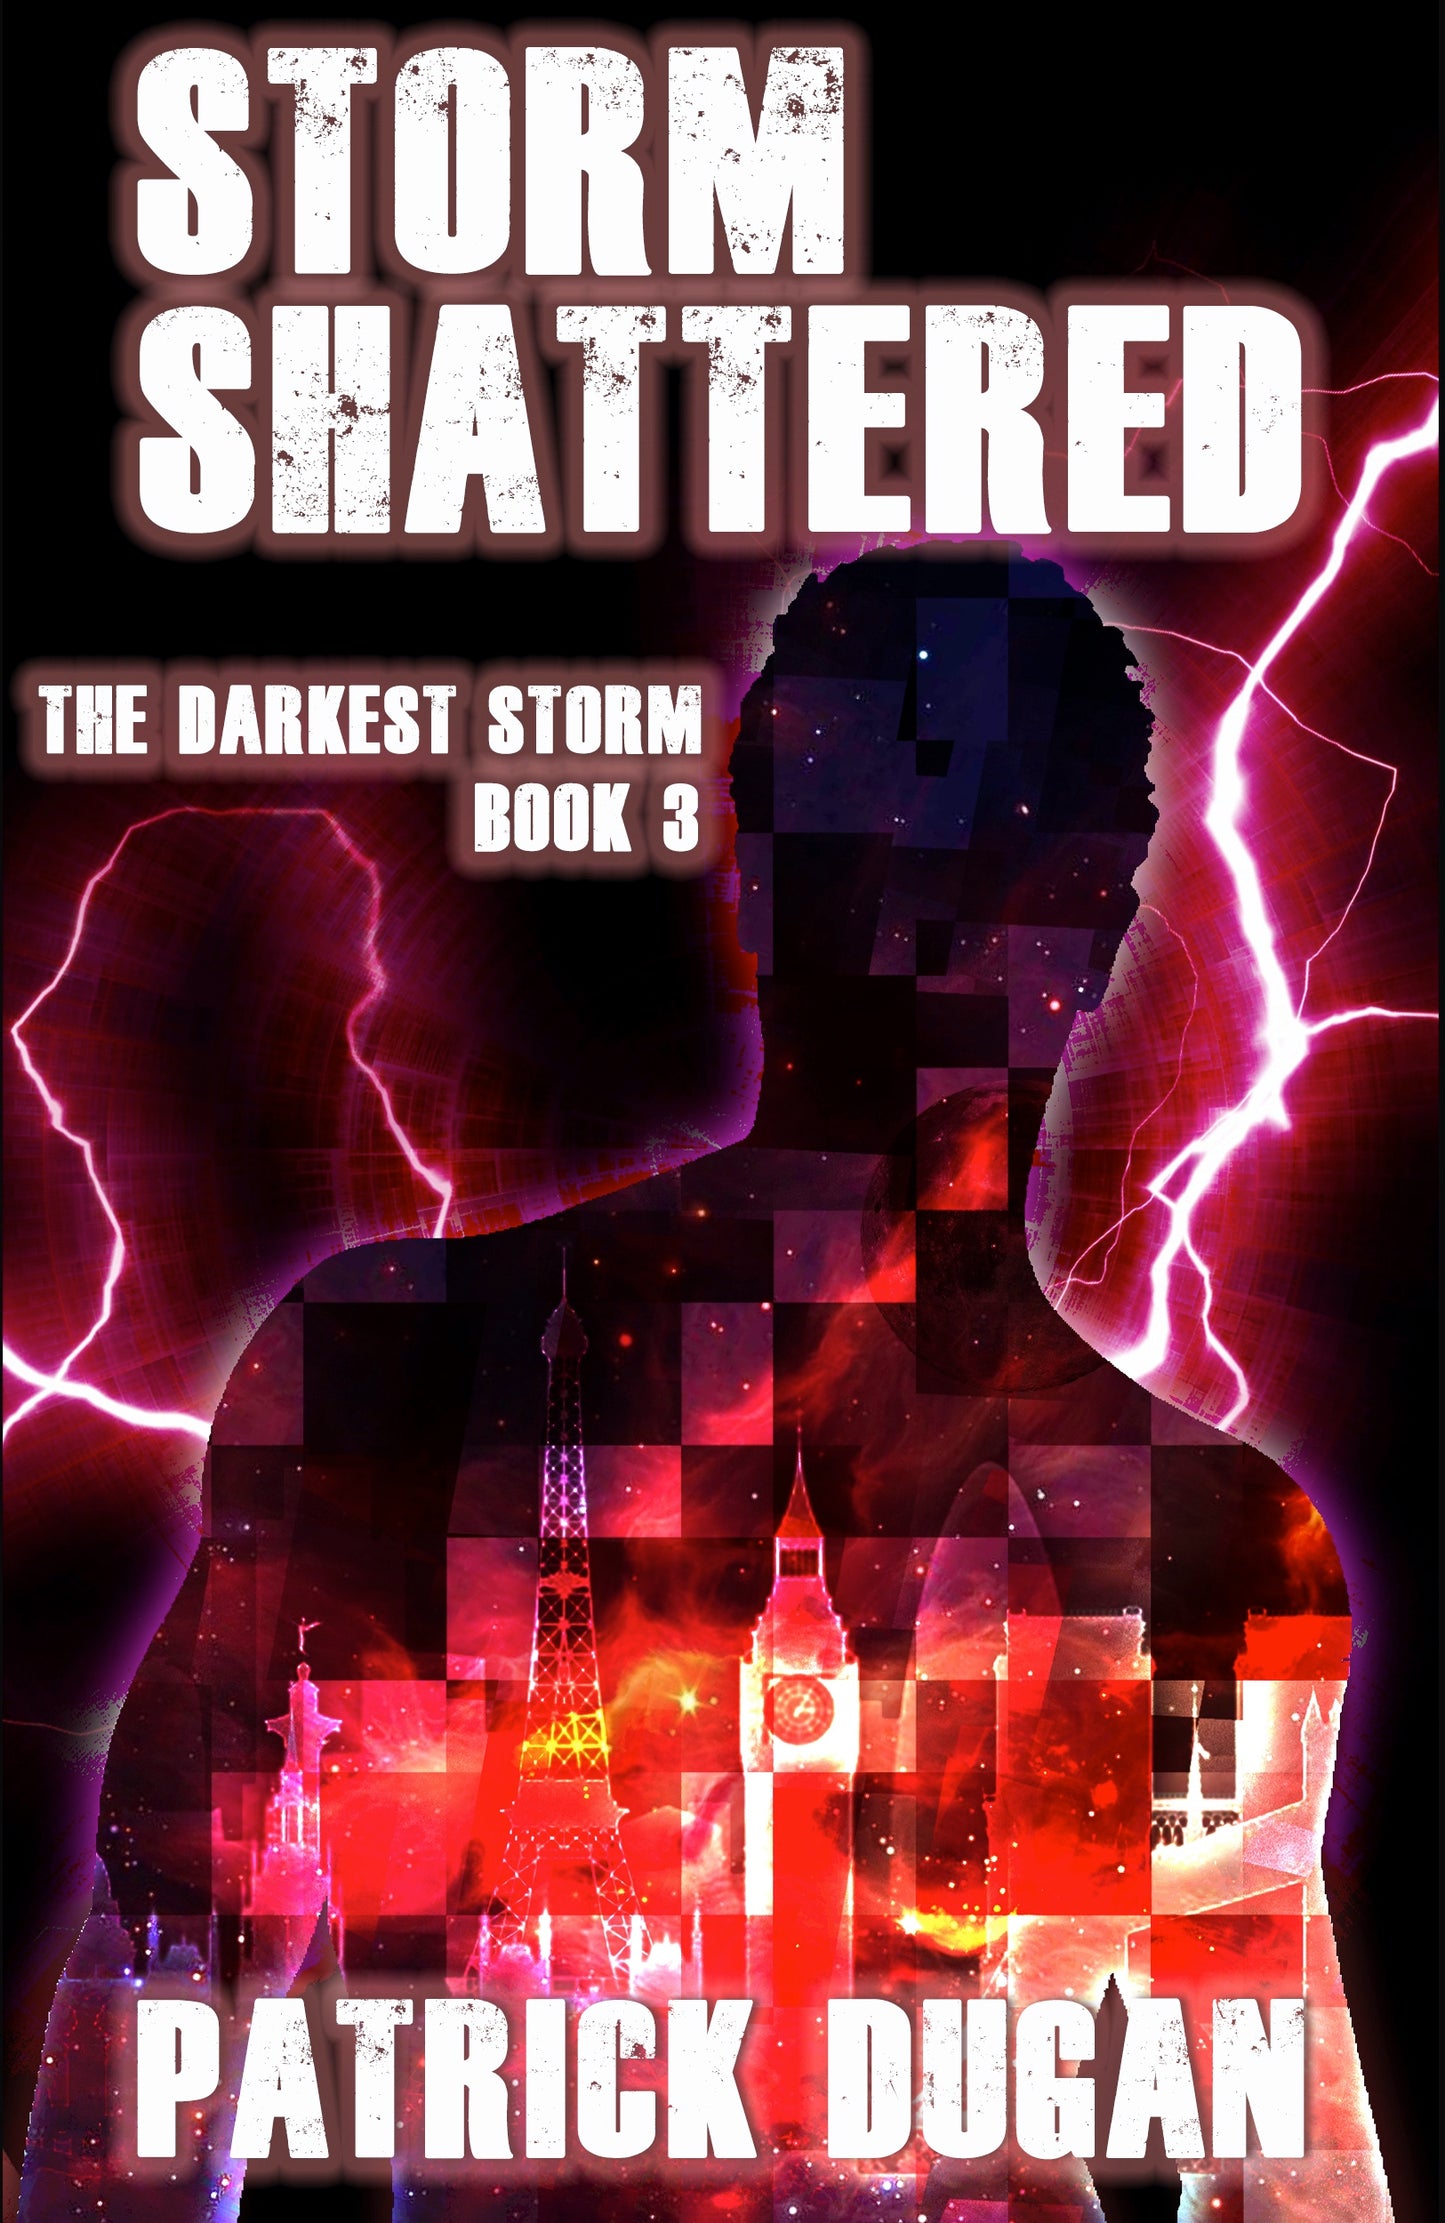 Darkest Storm Paperback Bundle!